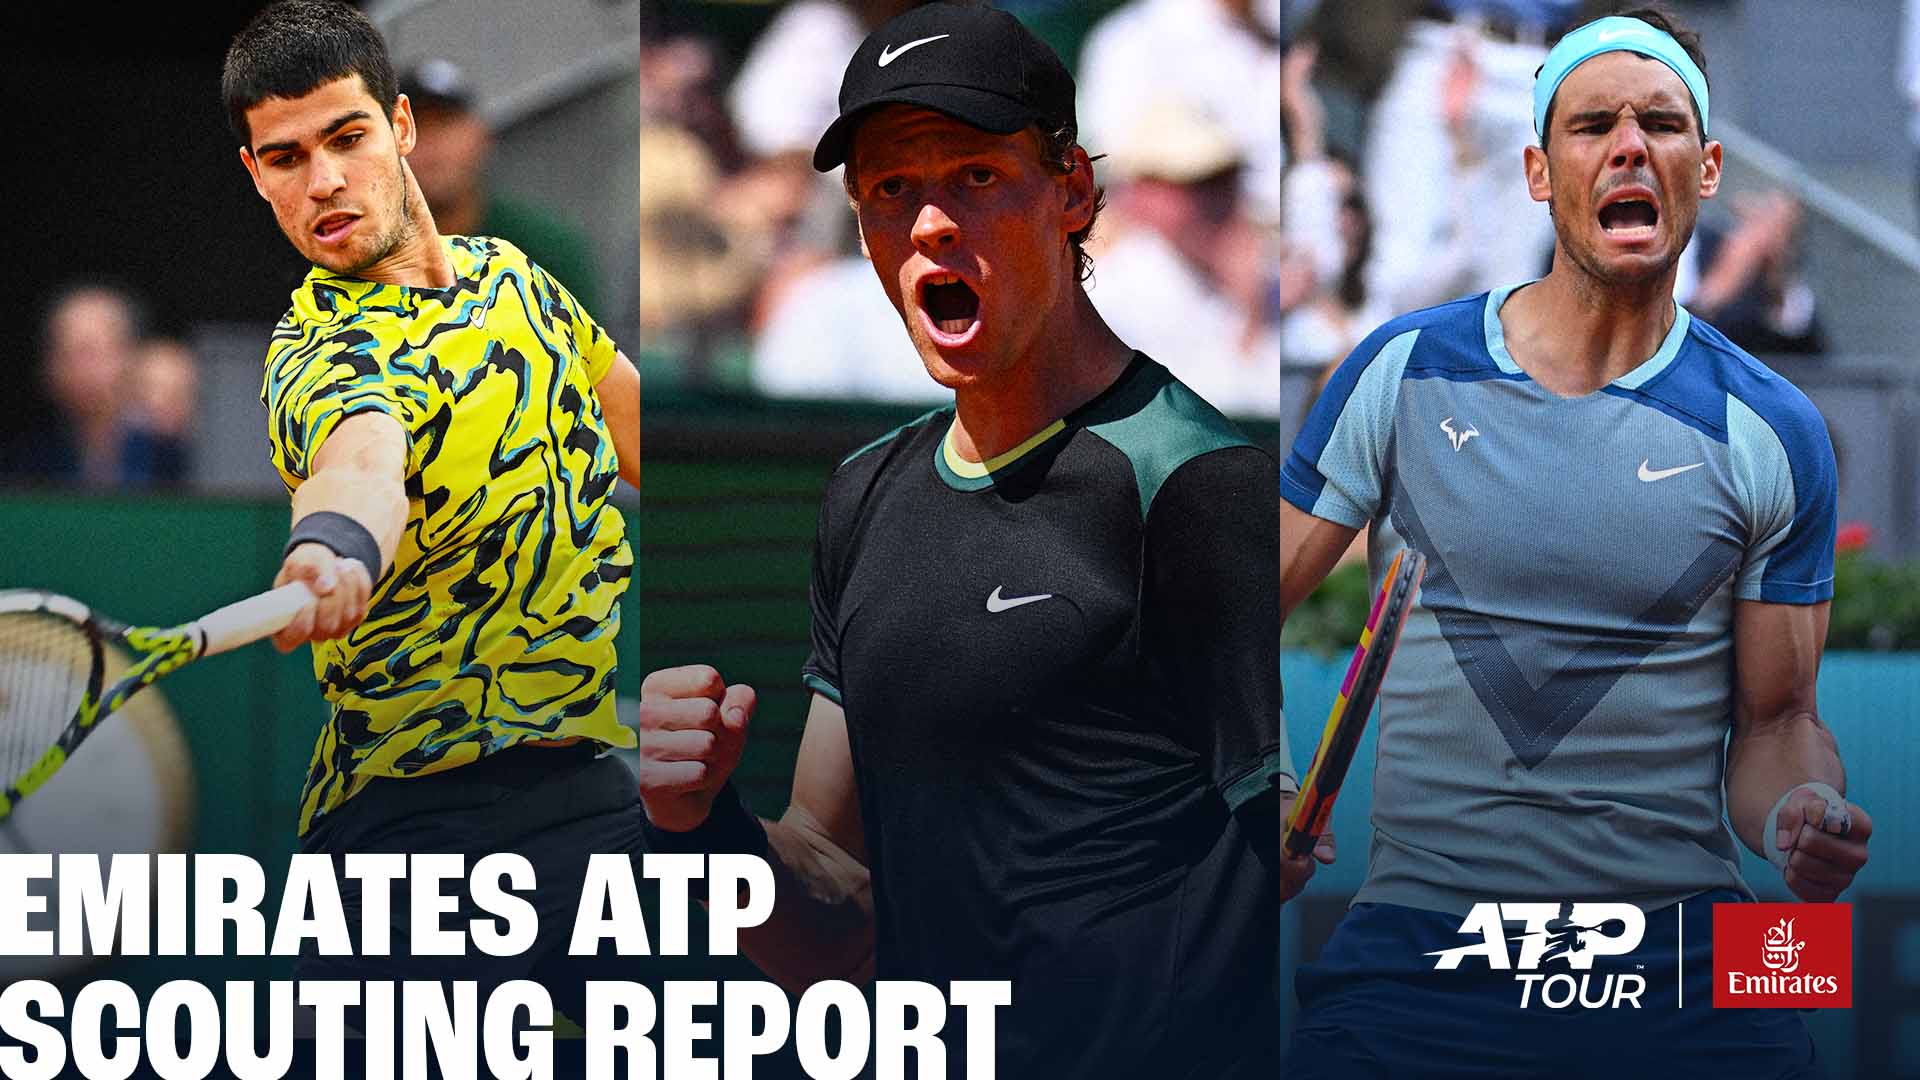 Scouting Report: Alcaraz, Sinner y Nadal compiten en Madrid